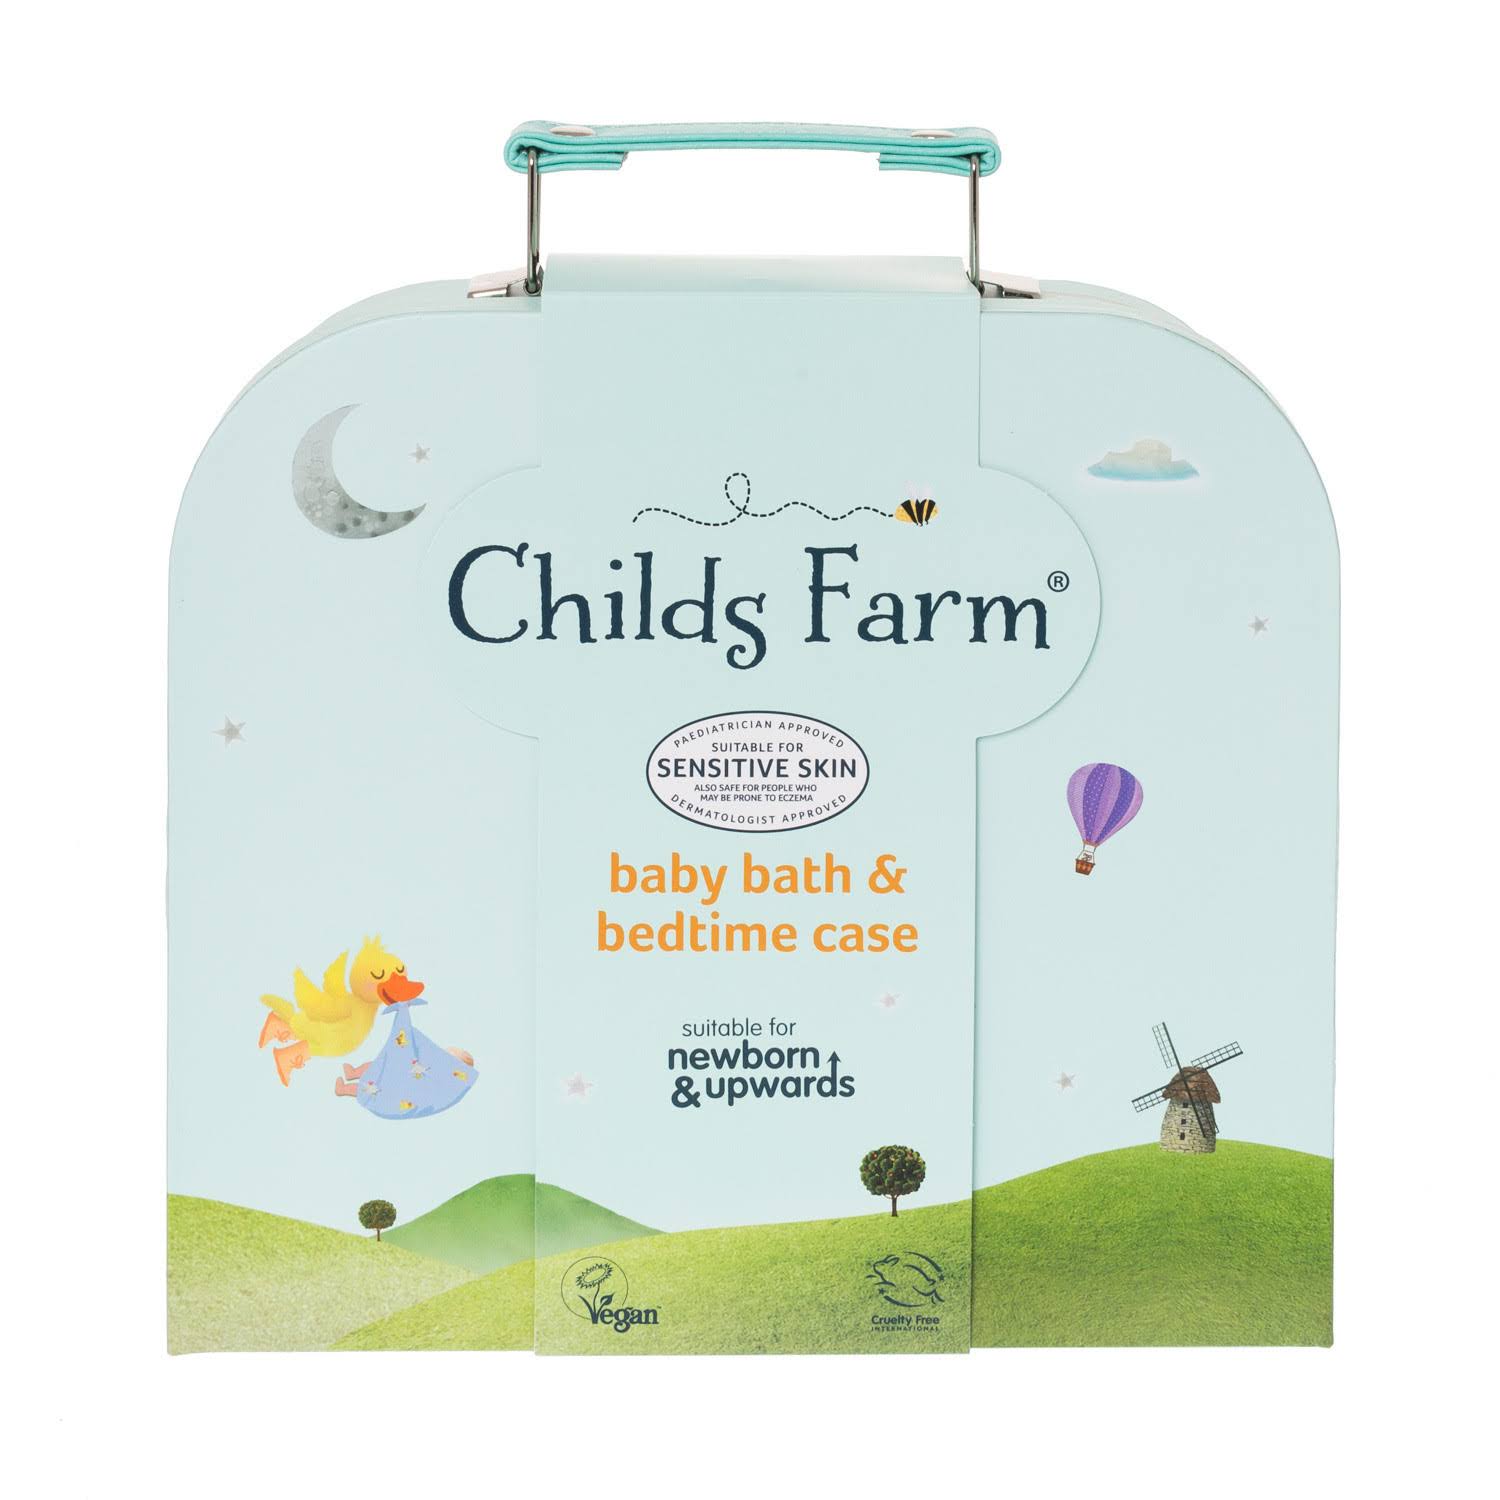 Childs Farm Baby Bath & Bedtime Case